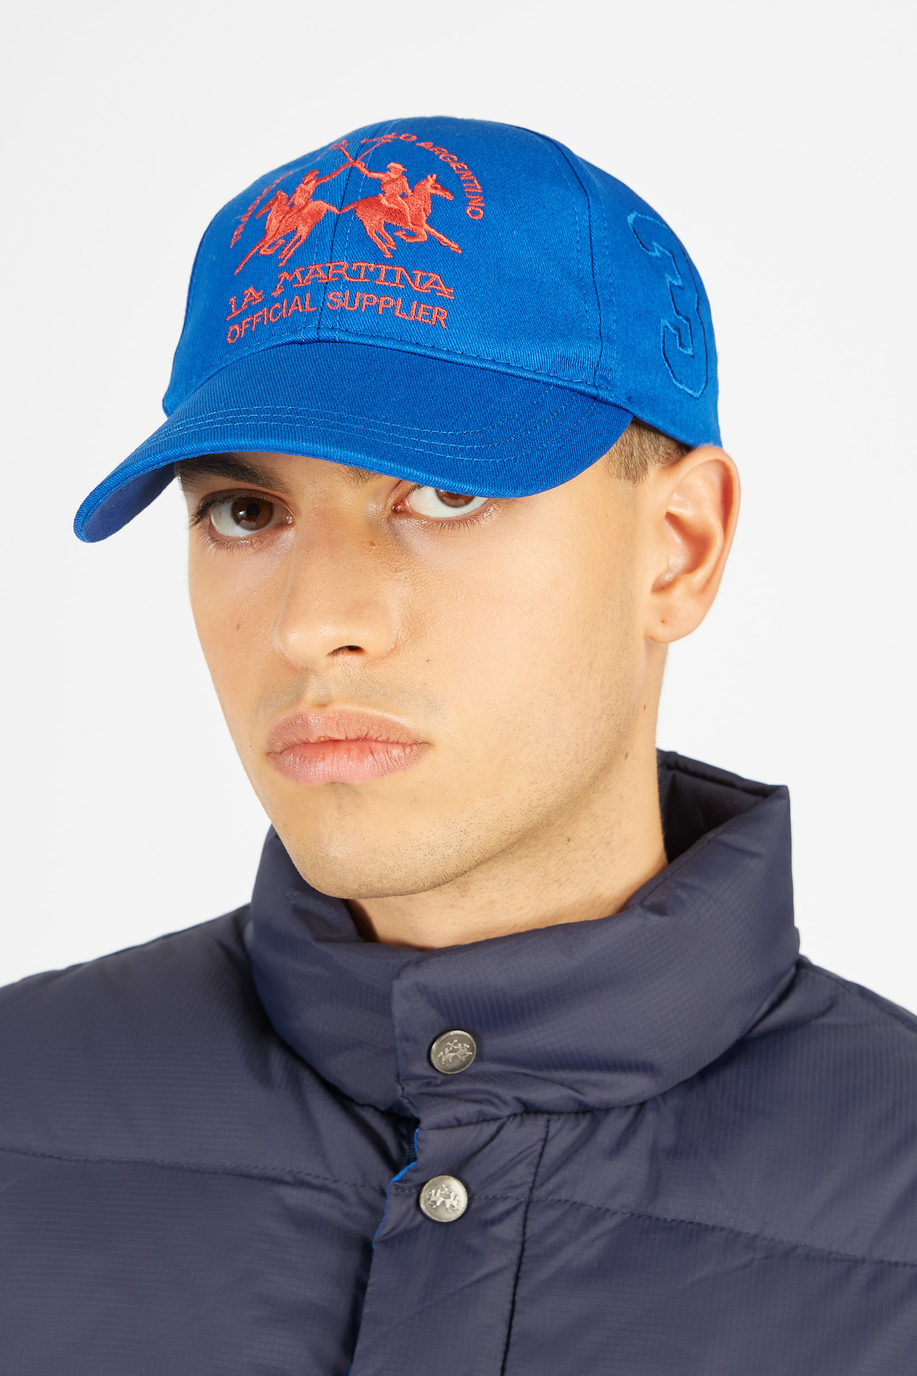 Cappellino da baseball unisex con chiusura regolabile regular fit - Cappelli | La Martina - Official Online Shop